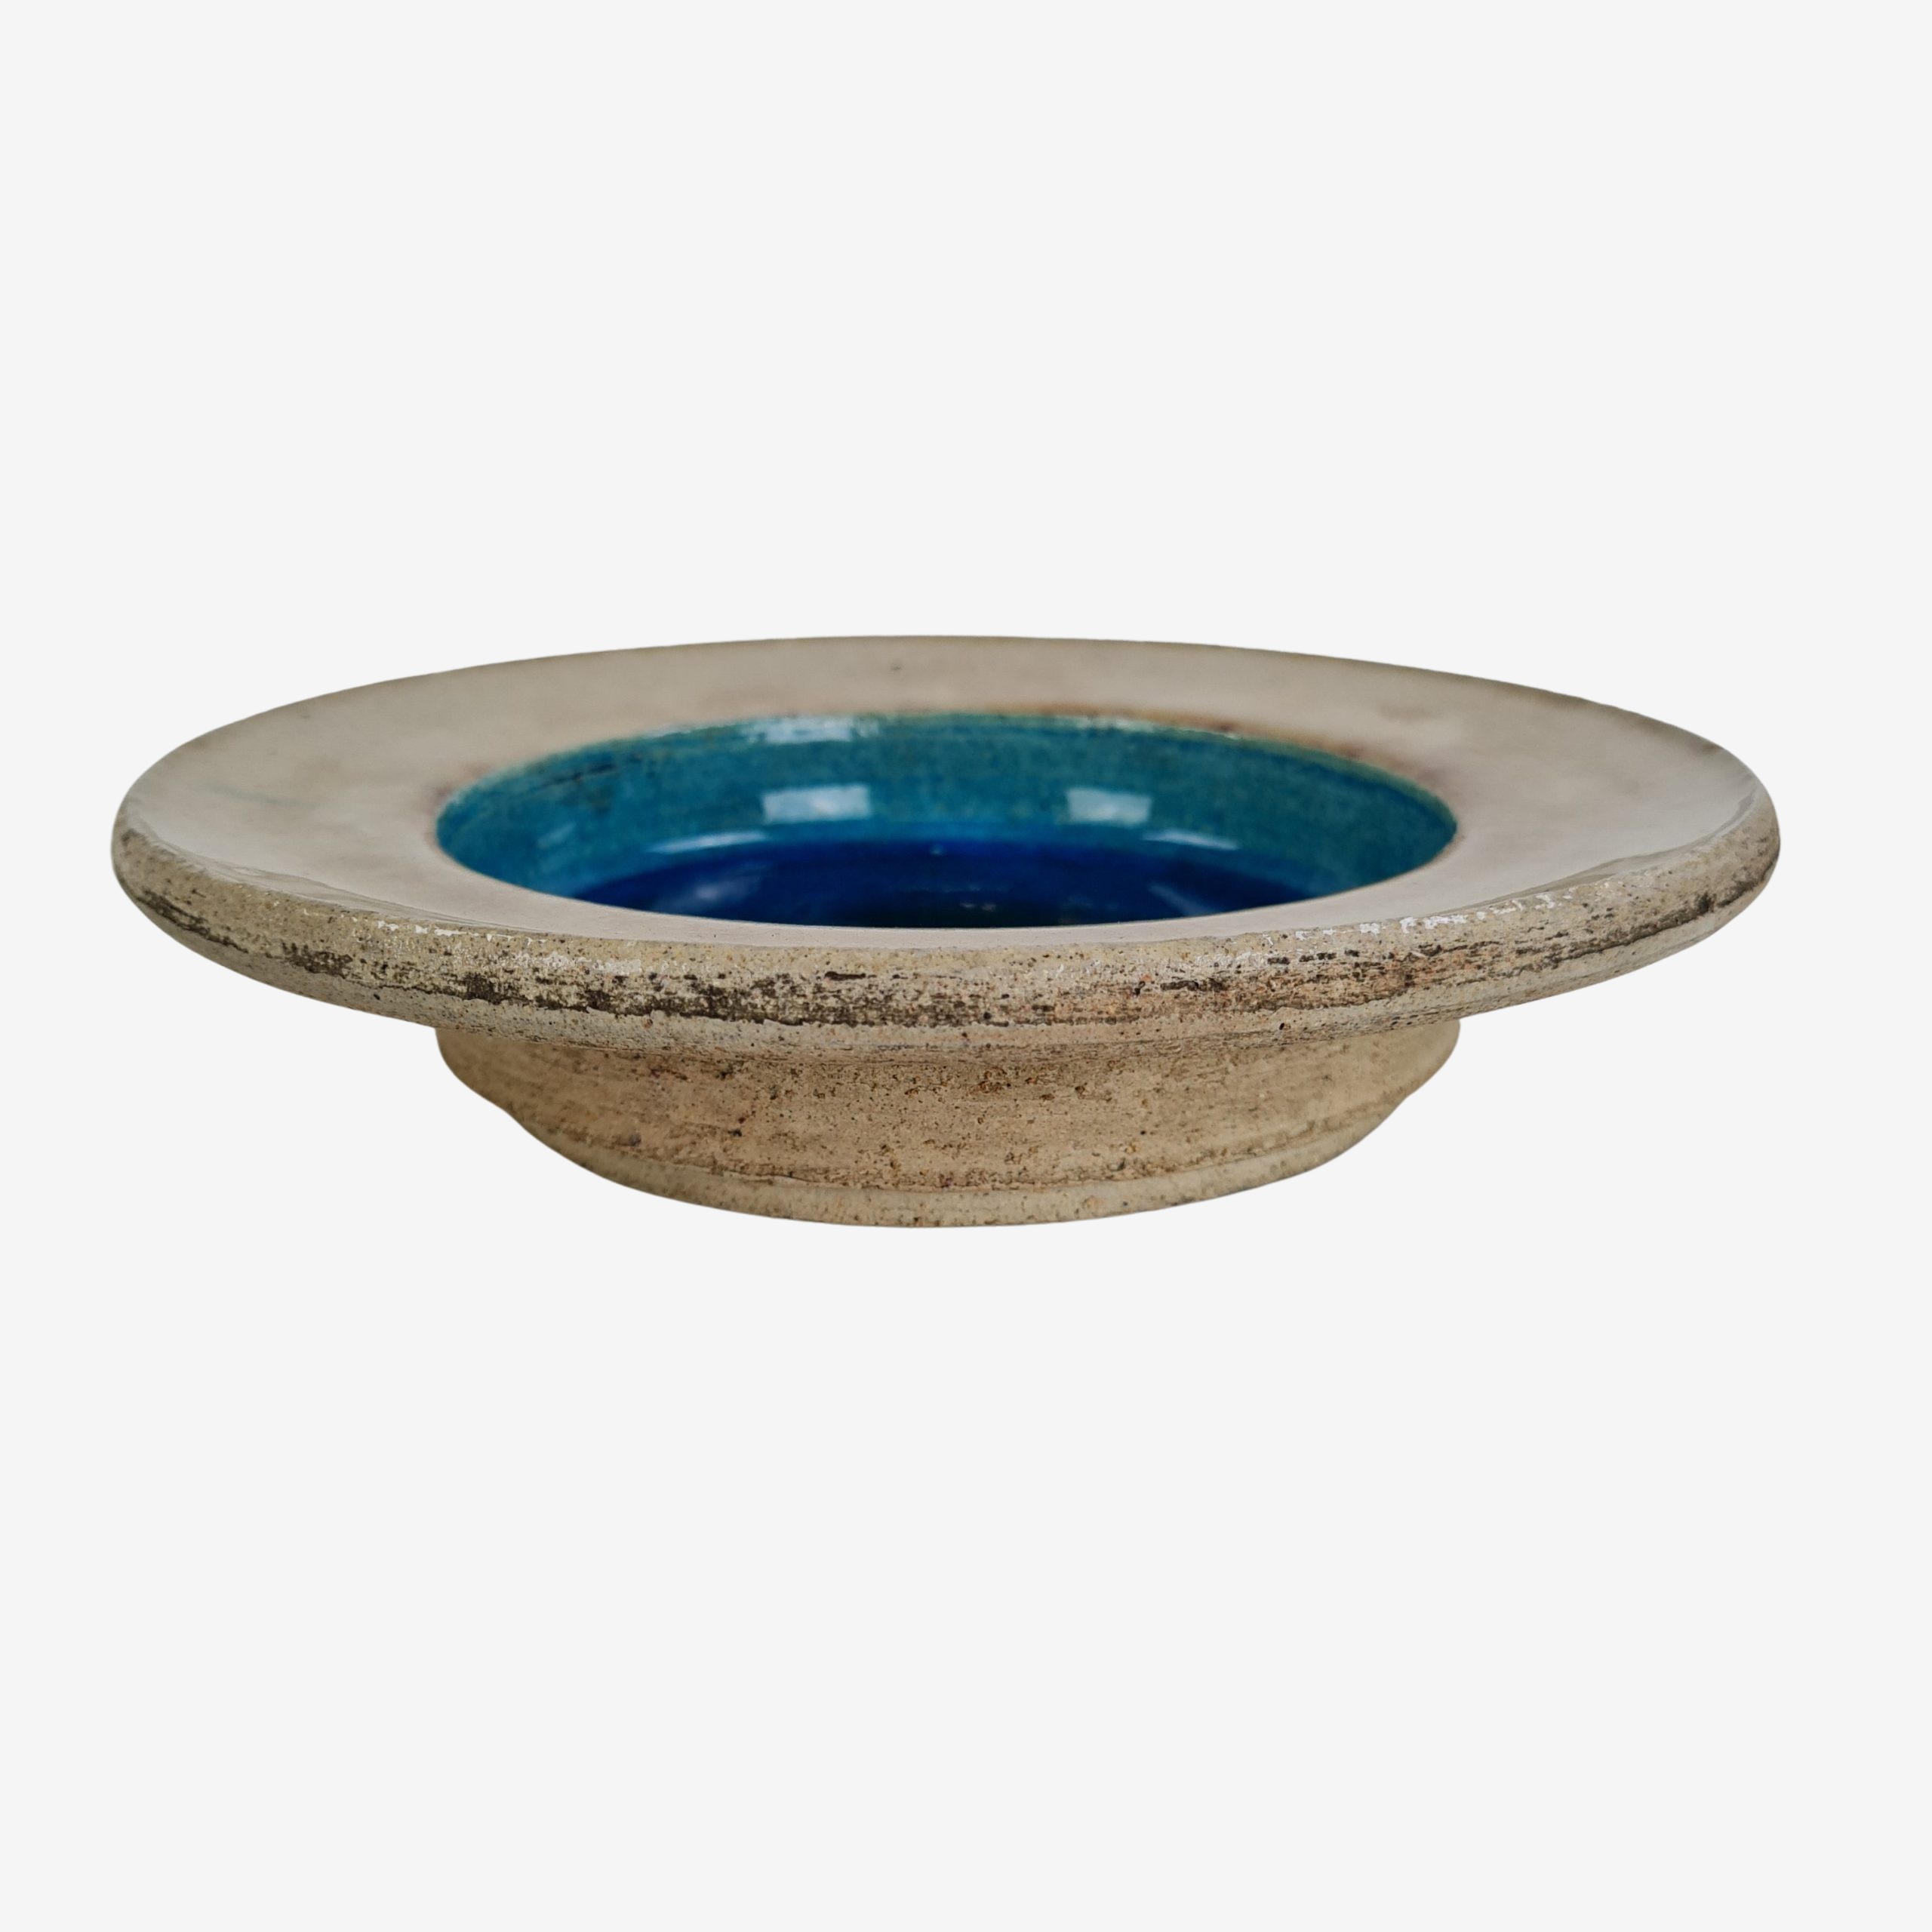 Ceramic table bowl | Nils Kähler | Kähler’s factory